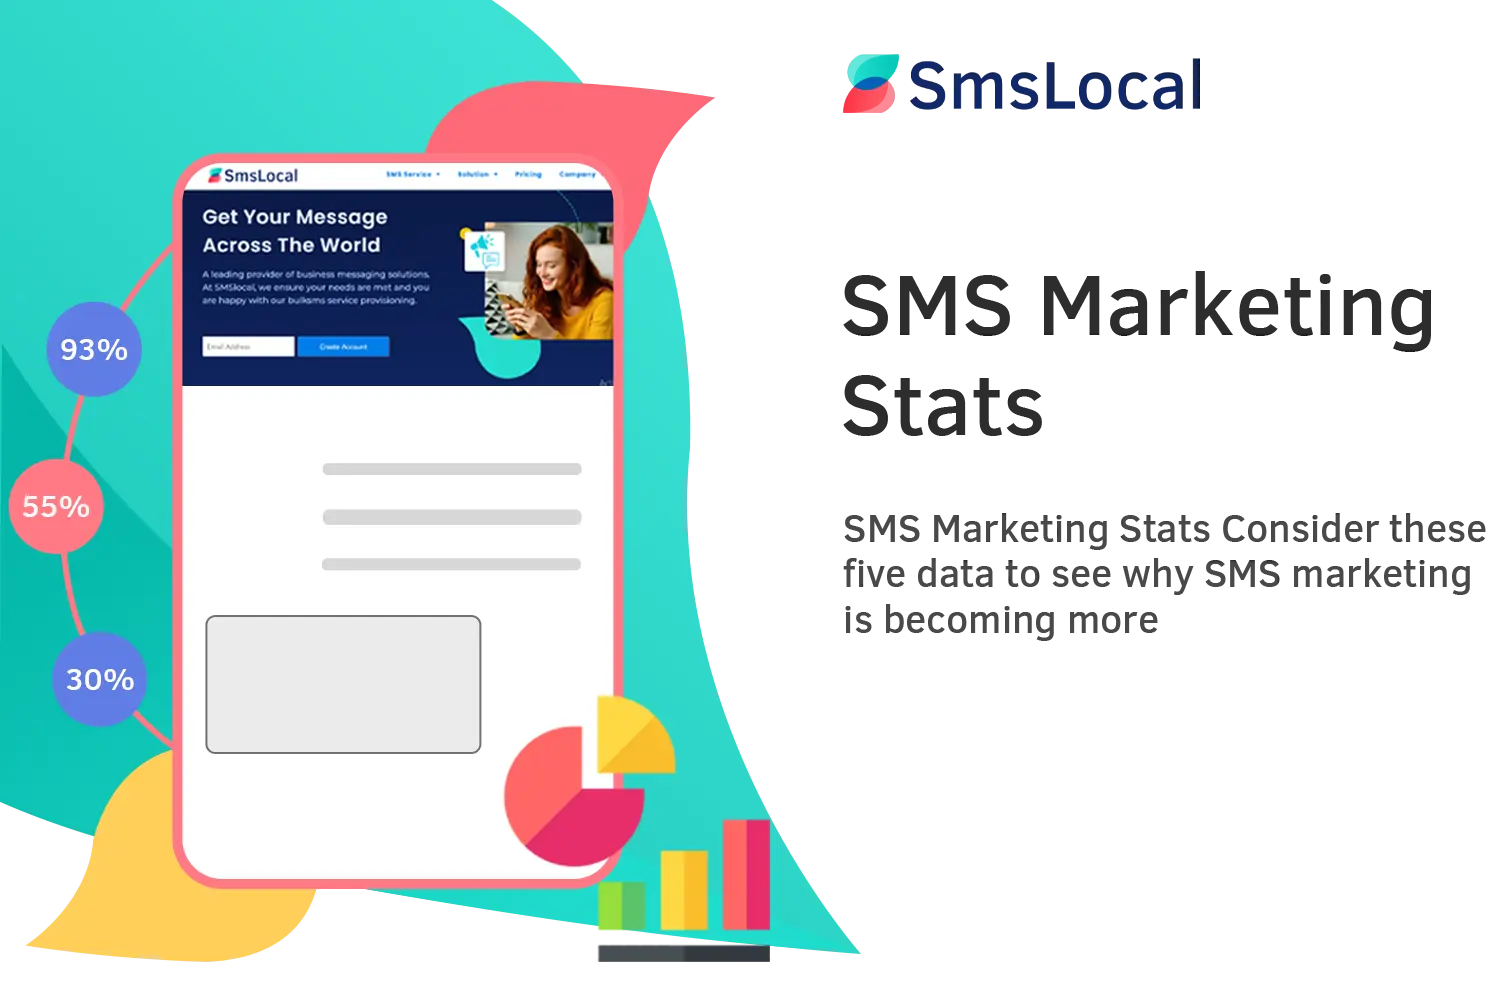 SMS Marketing stat